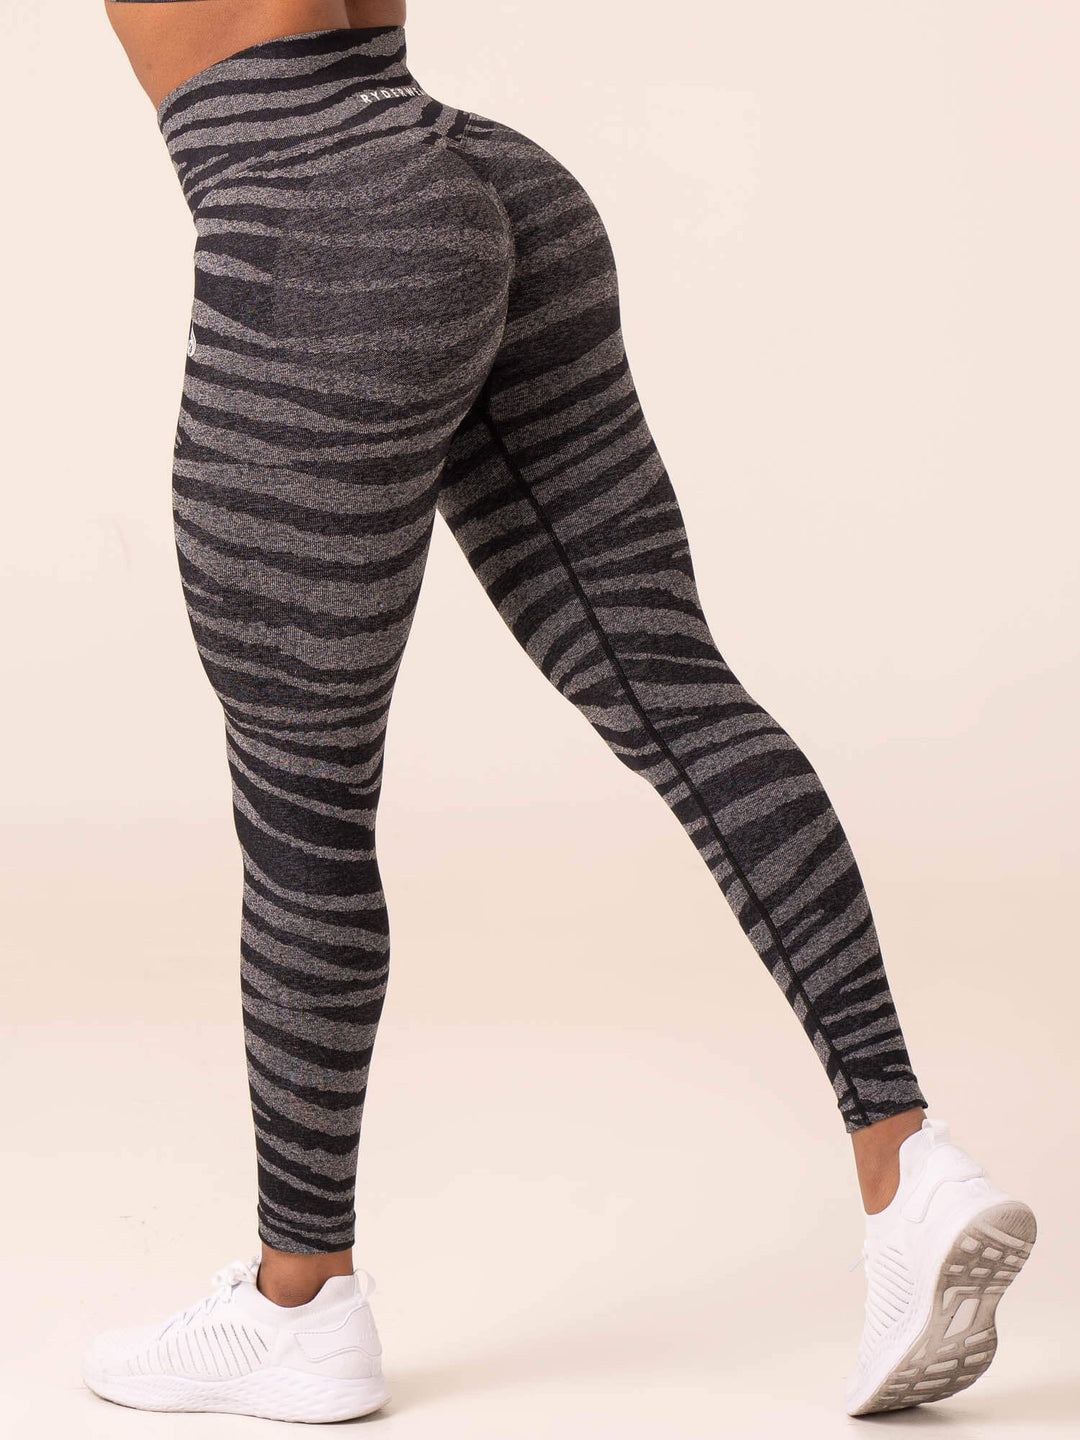 Yoga Set, Yoga Legging, Printed Workout Set Top and Legging, Zebra in Black